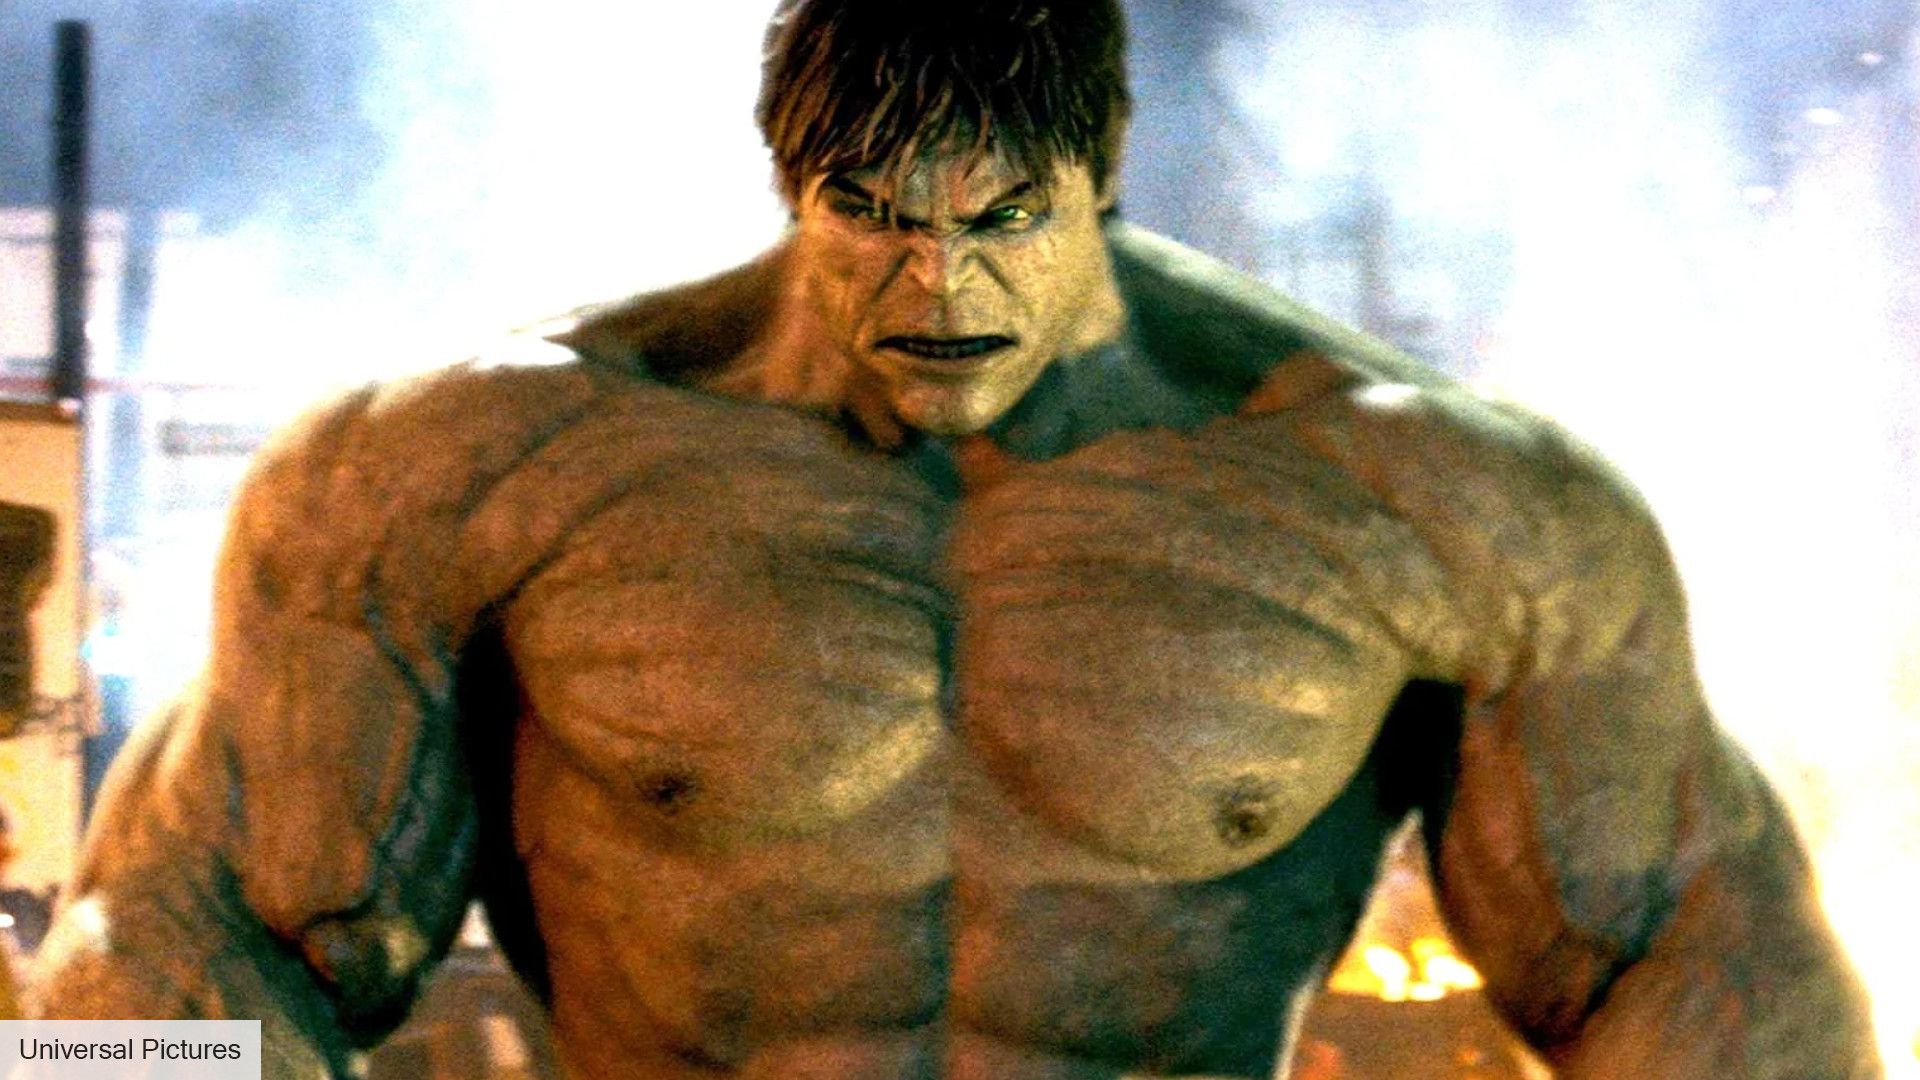 Edward Norton as Hulk